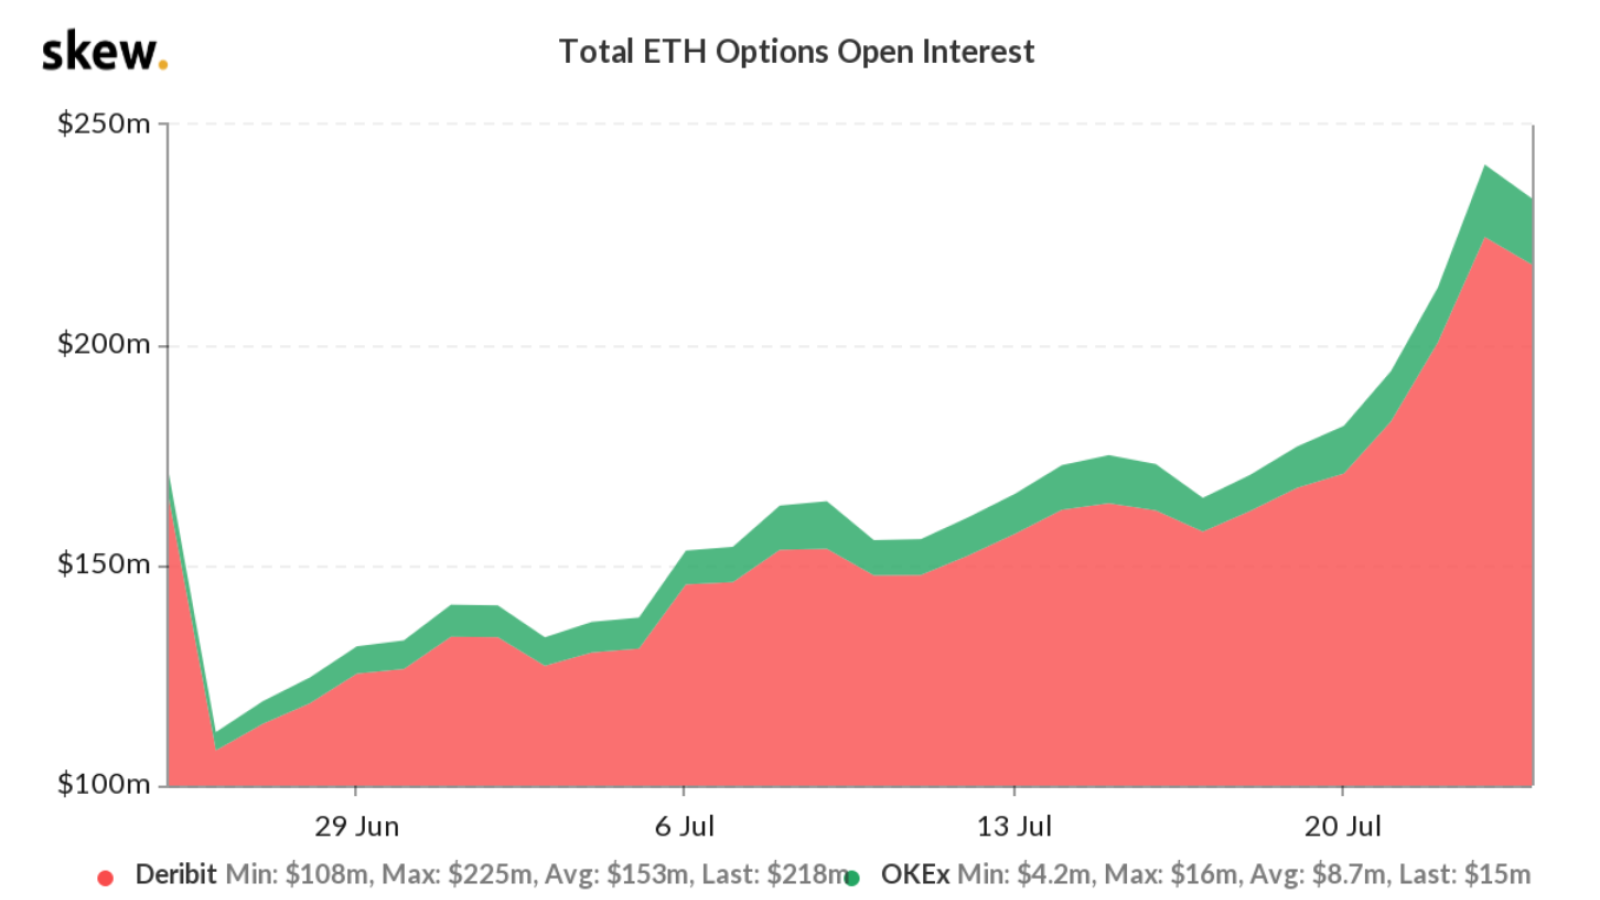 Total ETH Options Open Interest